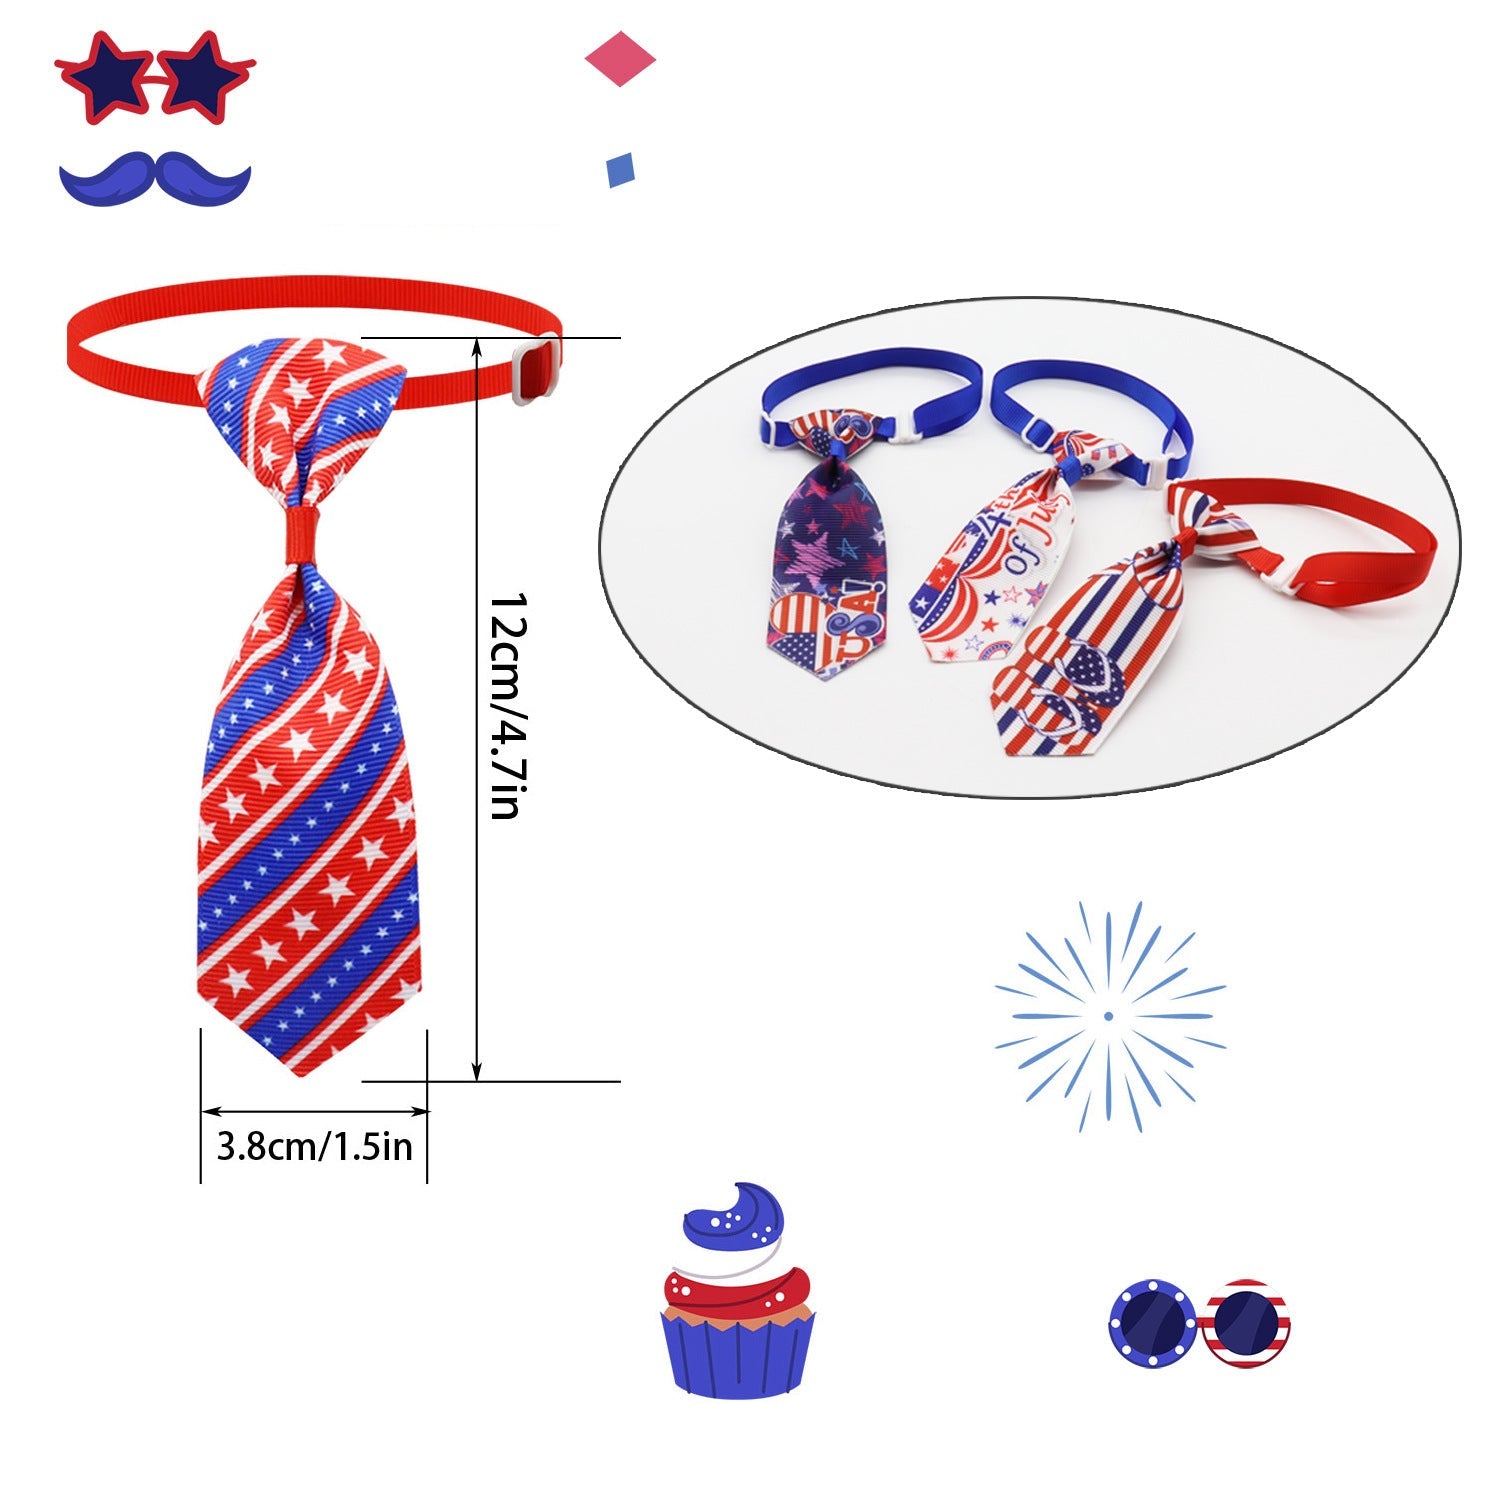 Adjustable Independence Day Pet Neck Tie Pet Clothing Accessories